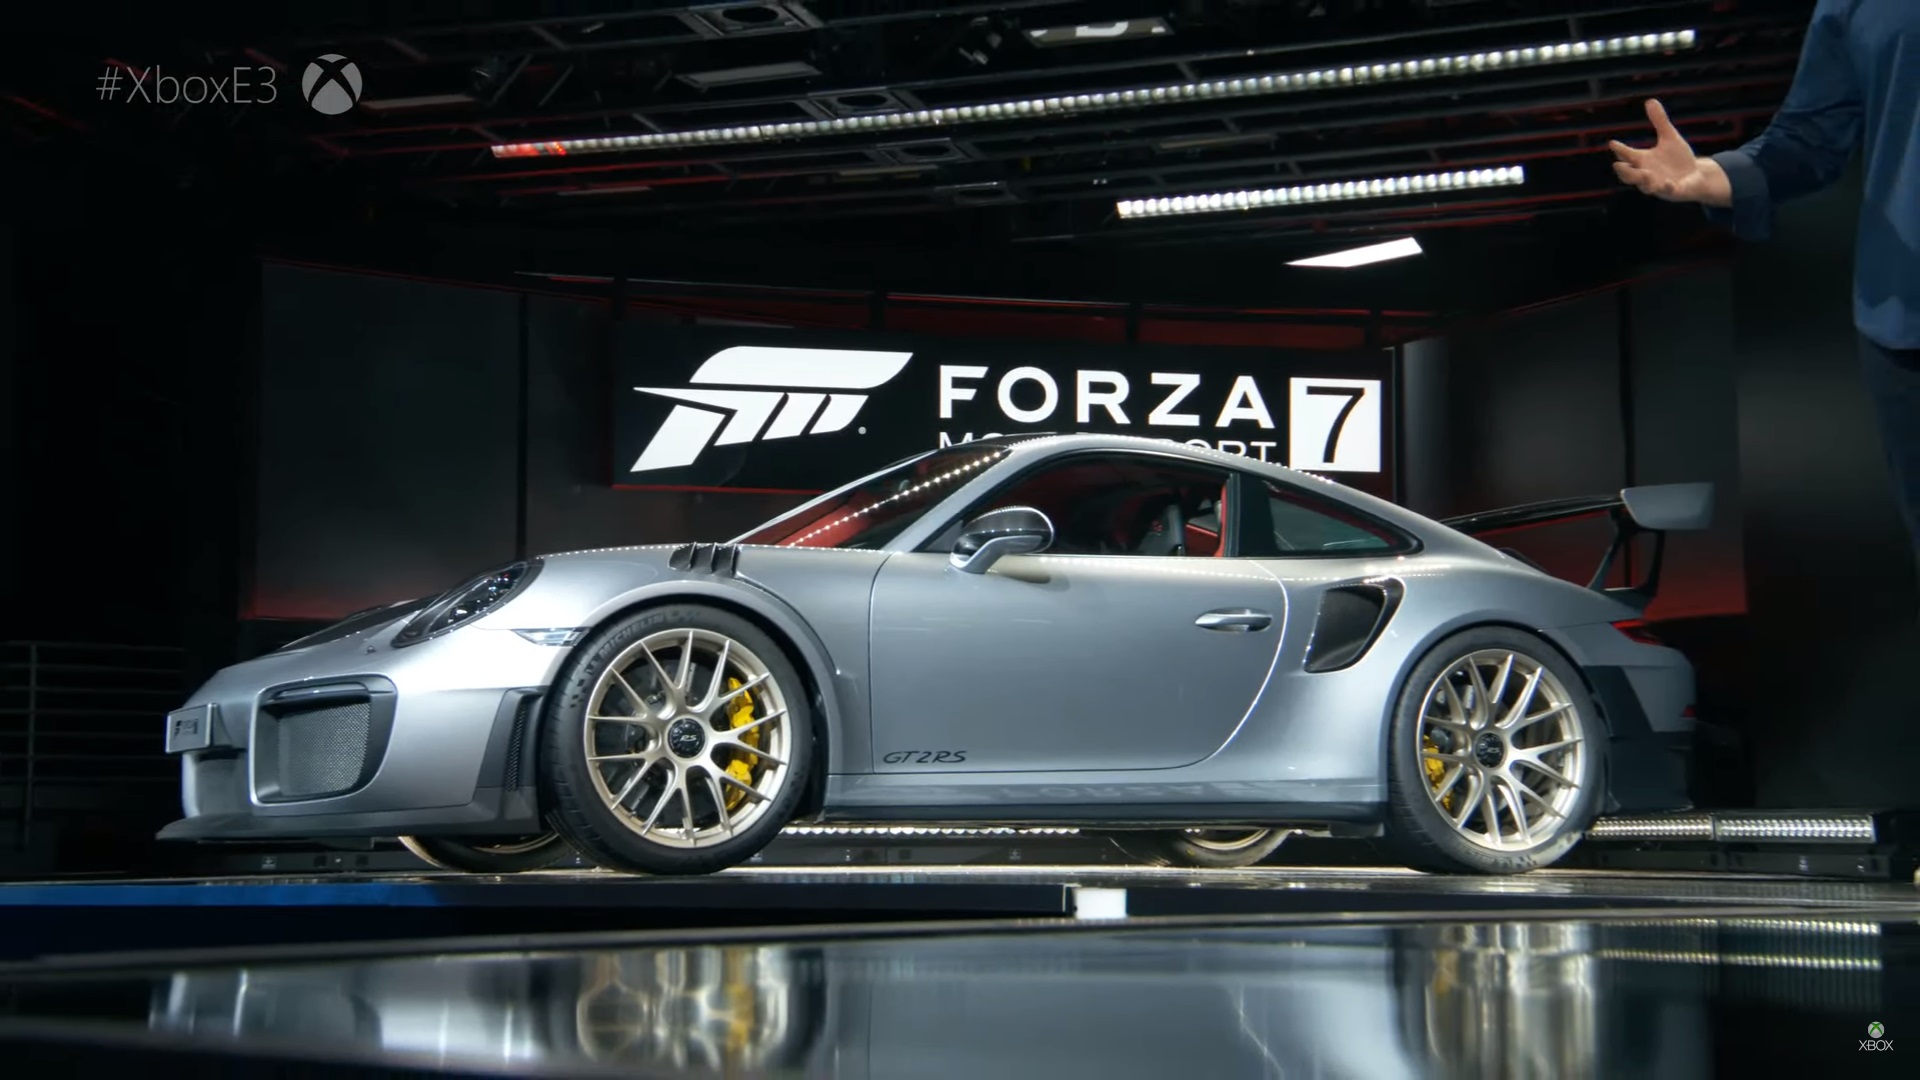 `.com Porsche 911 GT2 RS 991.2 991 XBOX One X Forza Motorsport 7 Launch E3 2017 2018